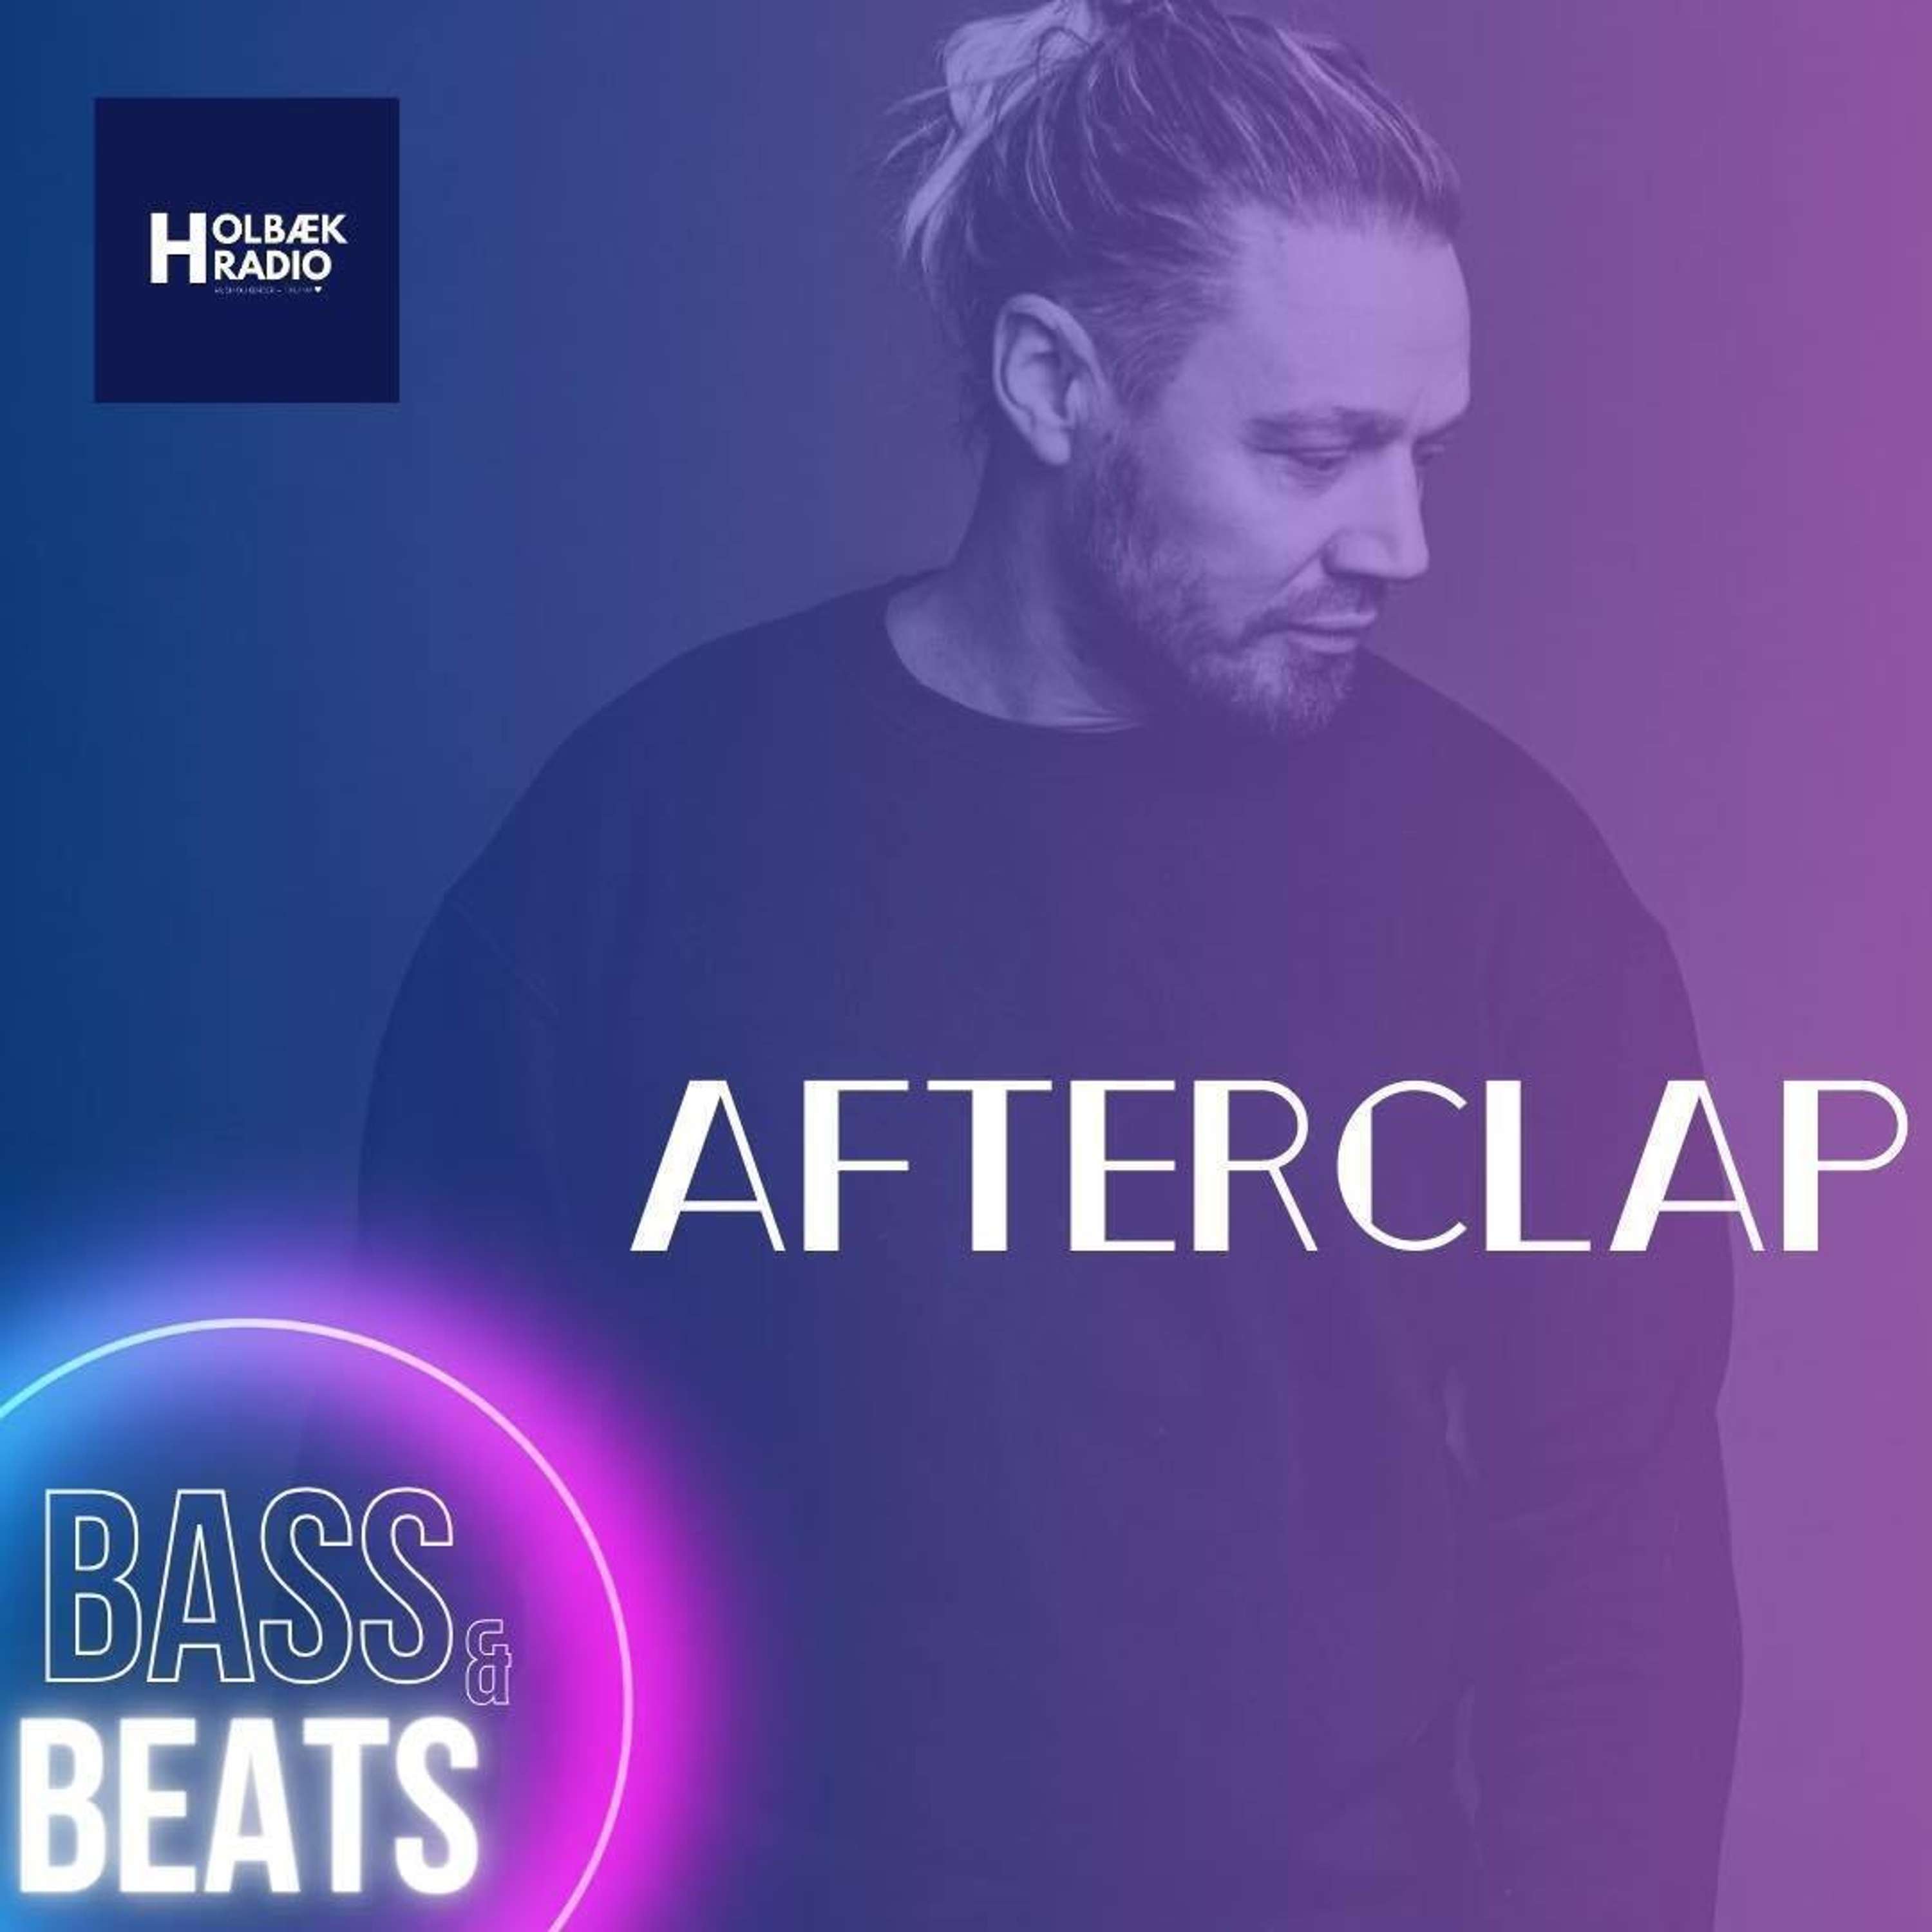 Afterclap - Bass & Beats - PODCAST